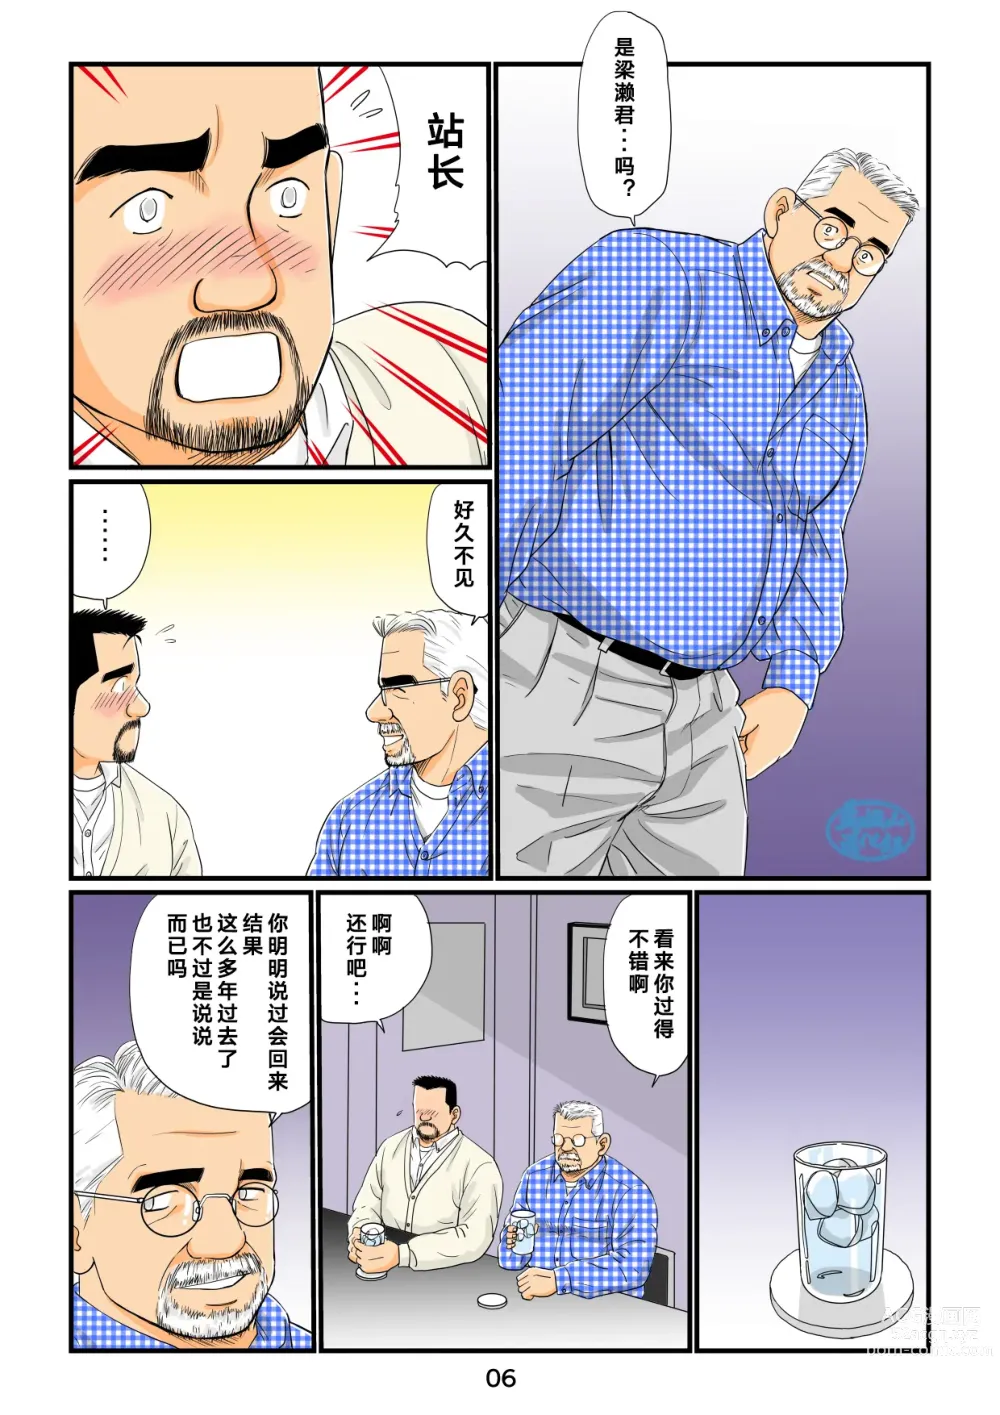 Page 6 of manga 「铁道员的浪漫」 第三回 站长与铁道员之夜